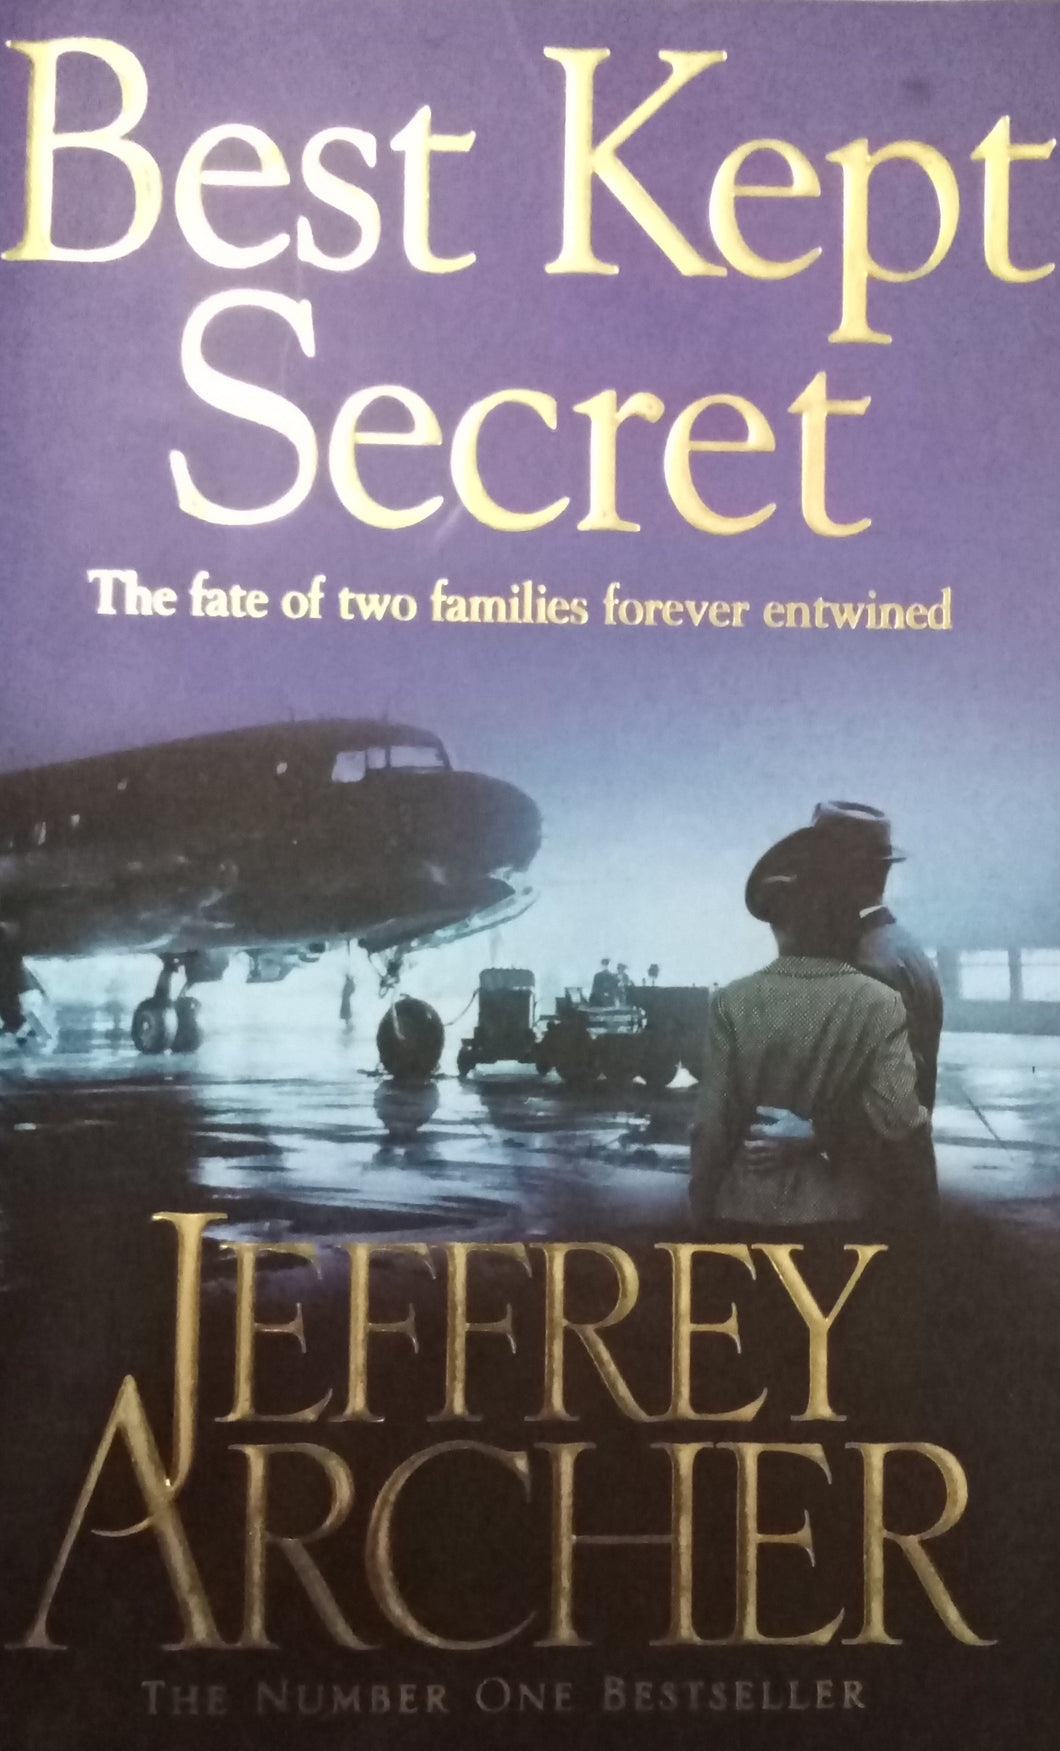 Best Kept Secret by Jeffry Archer